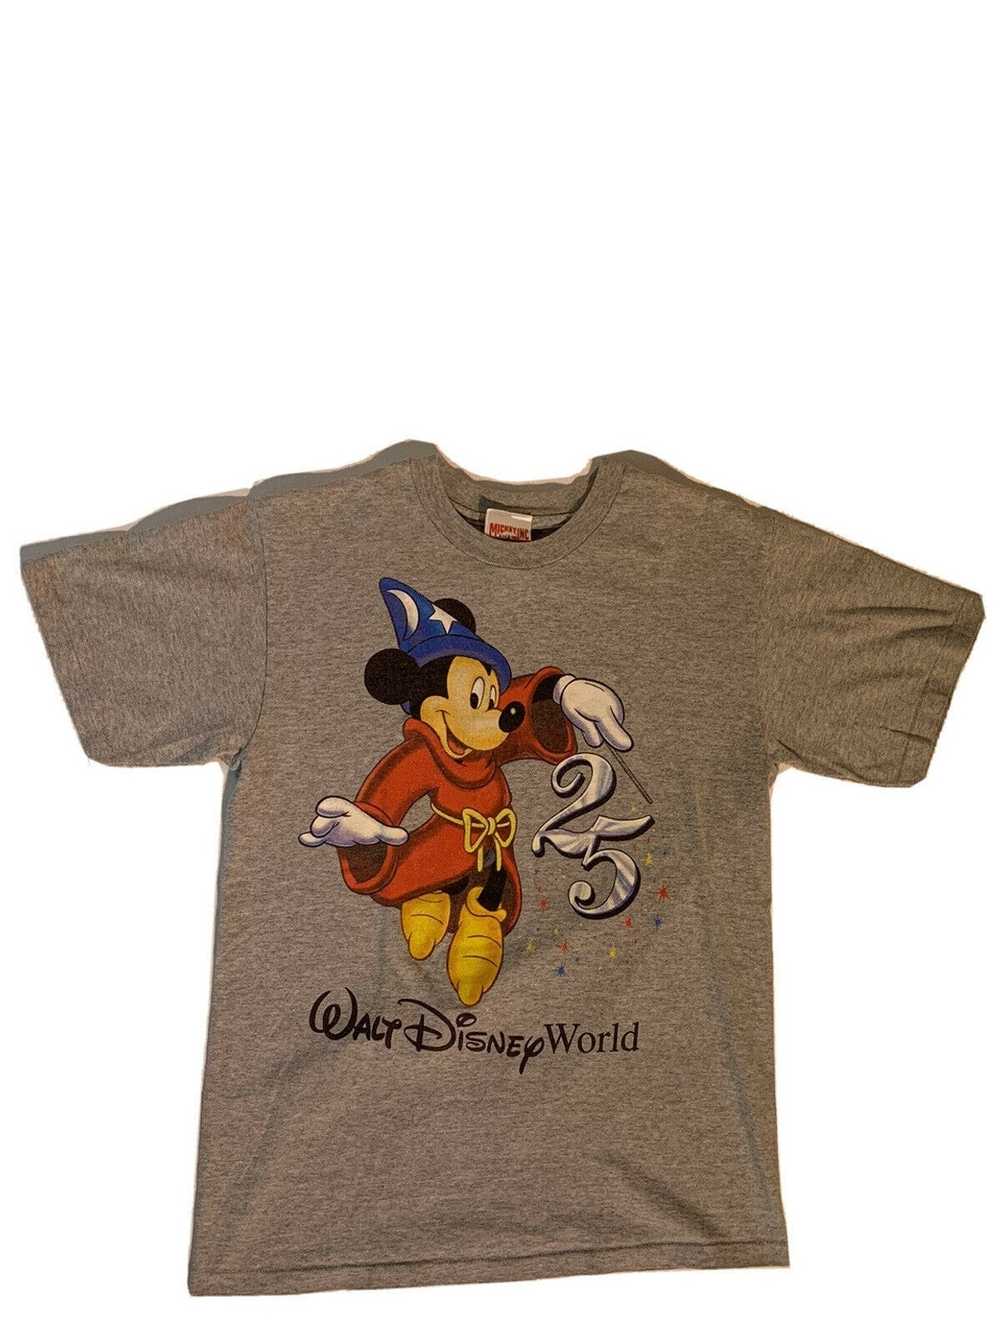 Disney Disney World Fantasia Grey Vintage Shirt S… - image 1